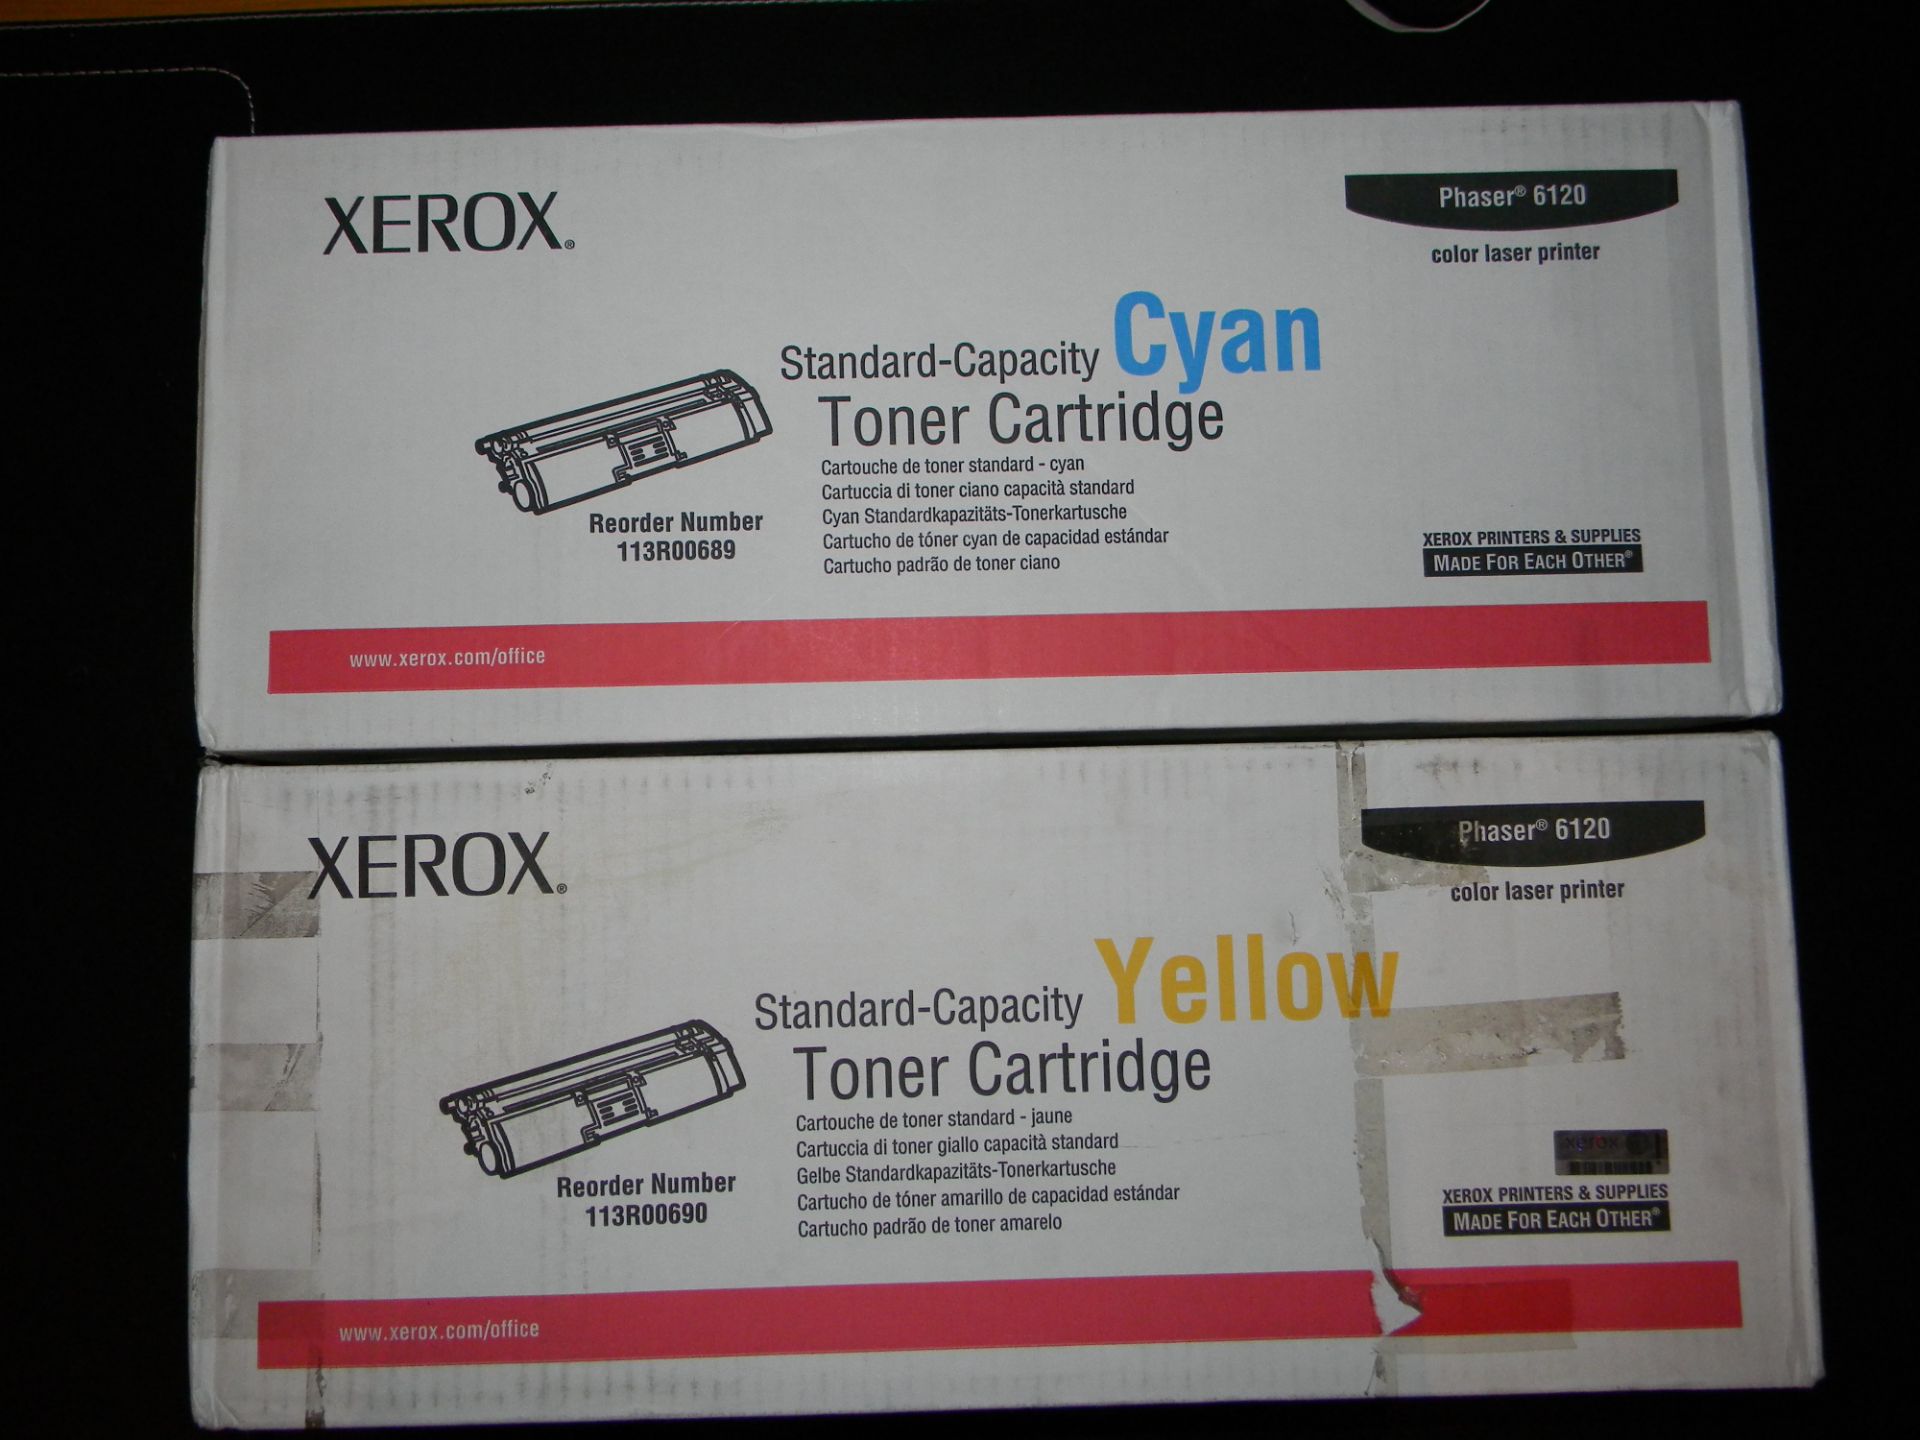 Xerox Toner Cartridge for Phaser 6120 x 2 (Yellow & Cyan)